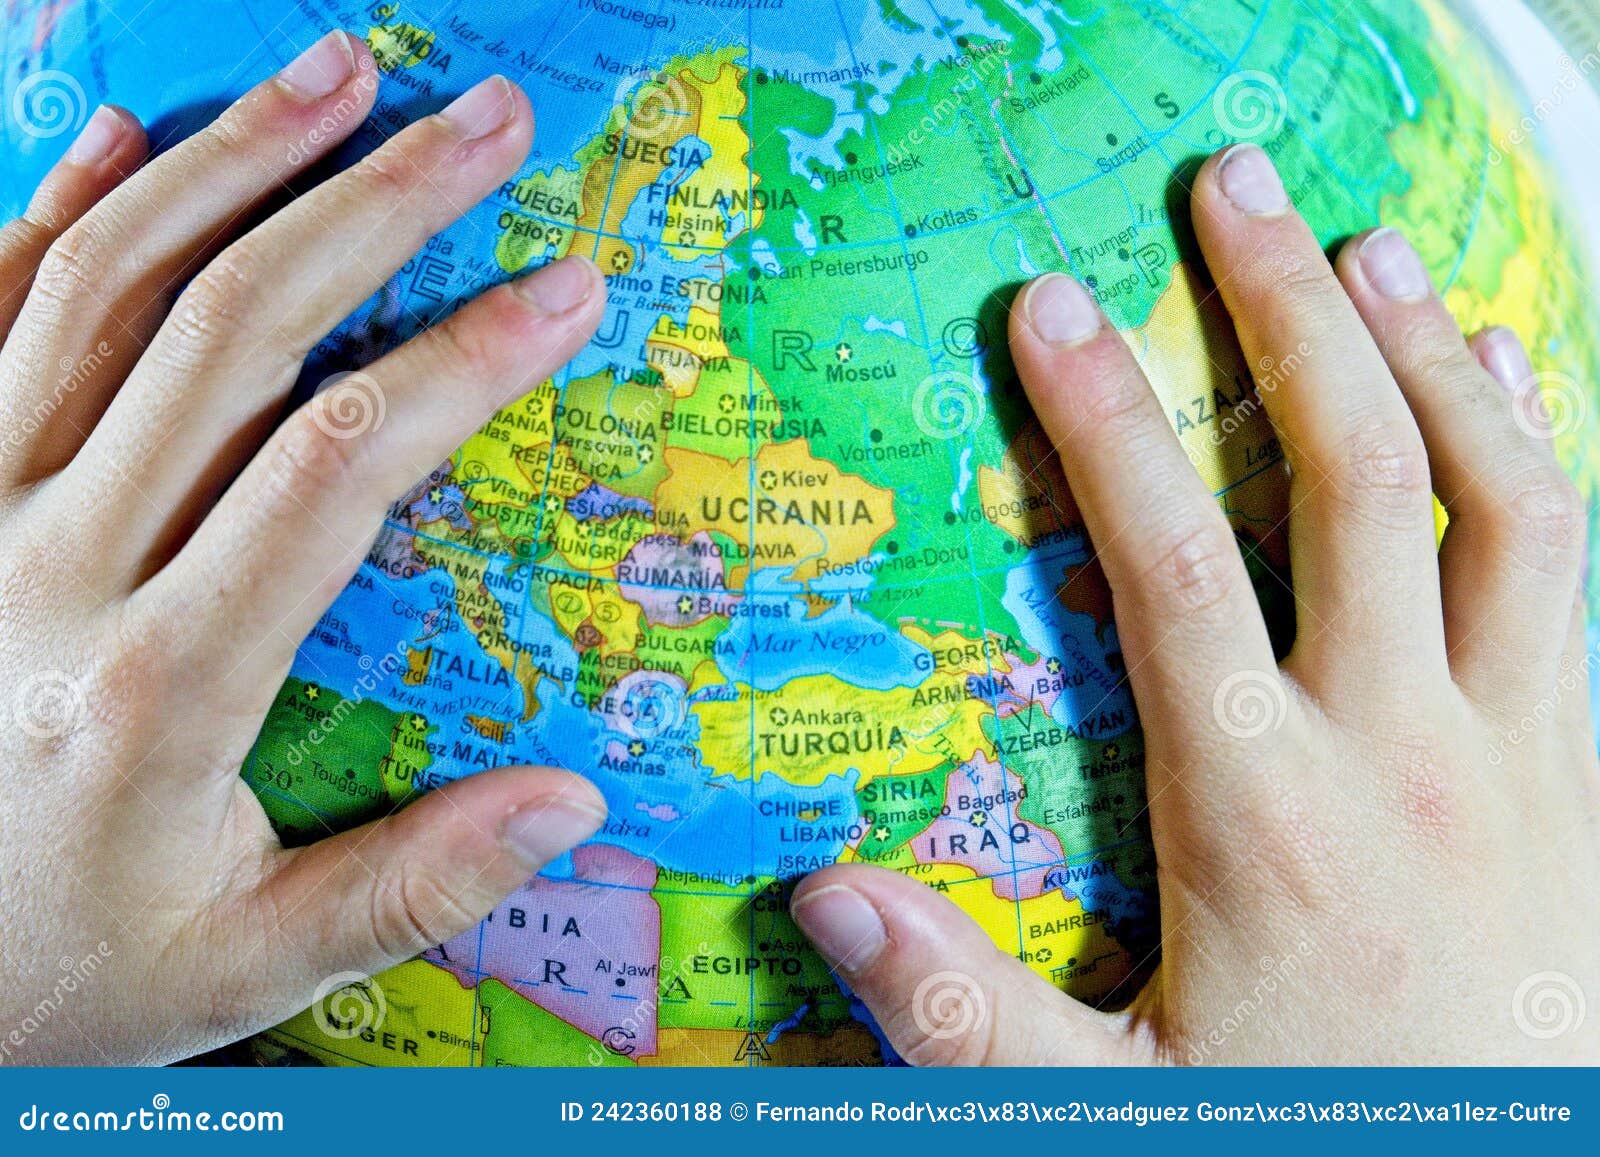 child& x27;s hand on a globe circling ukraine in spanish & x27;ucrania& x27;